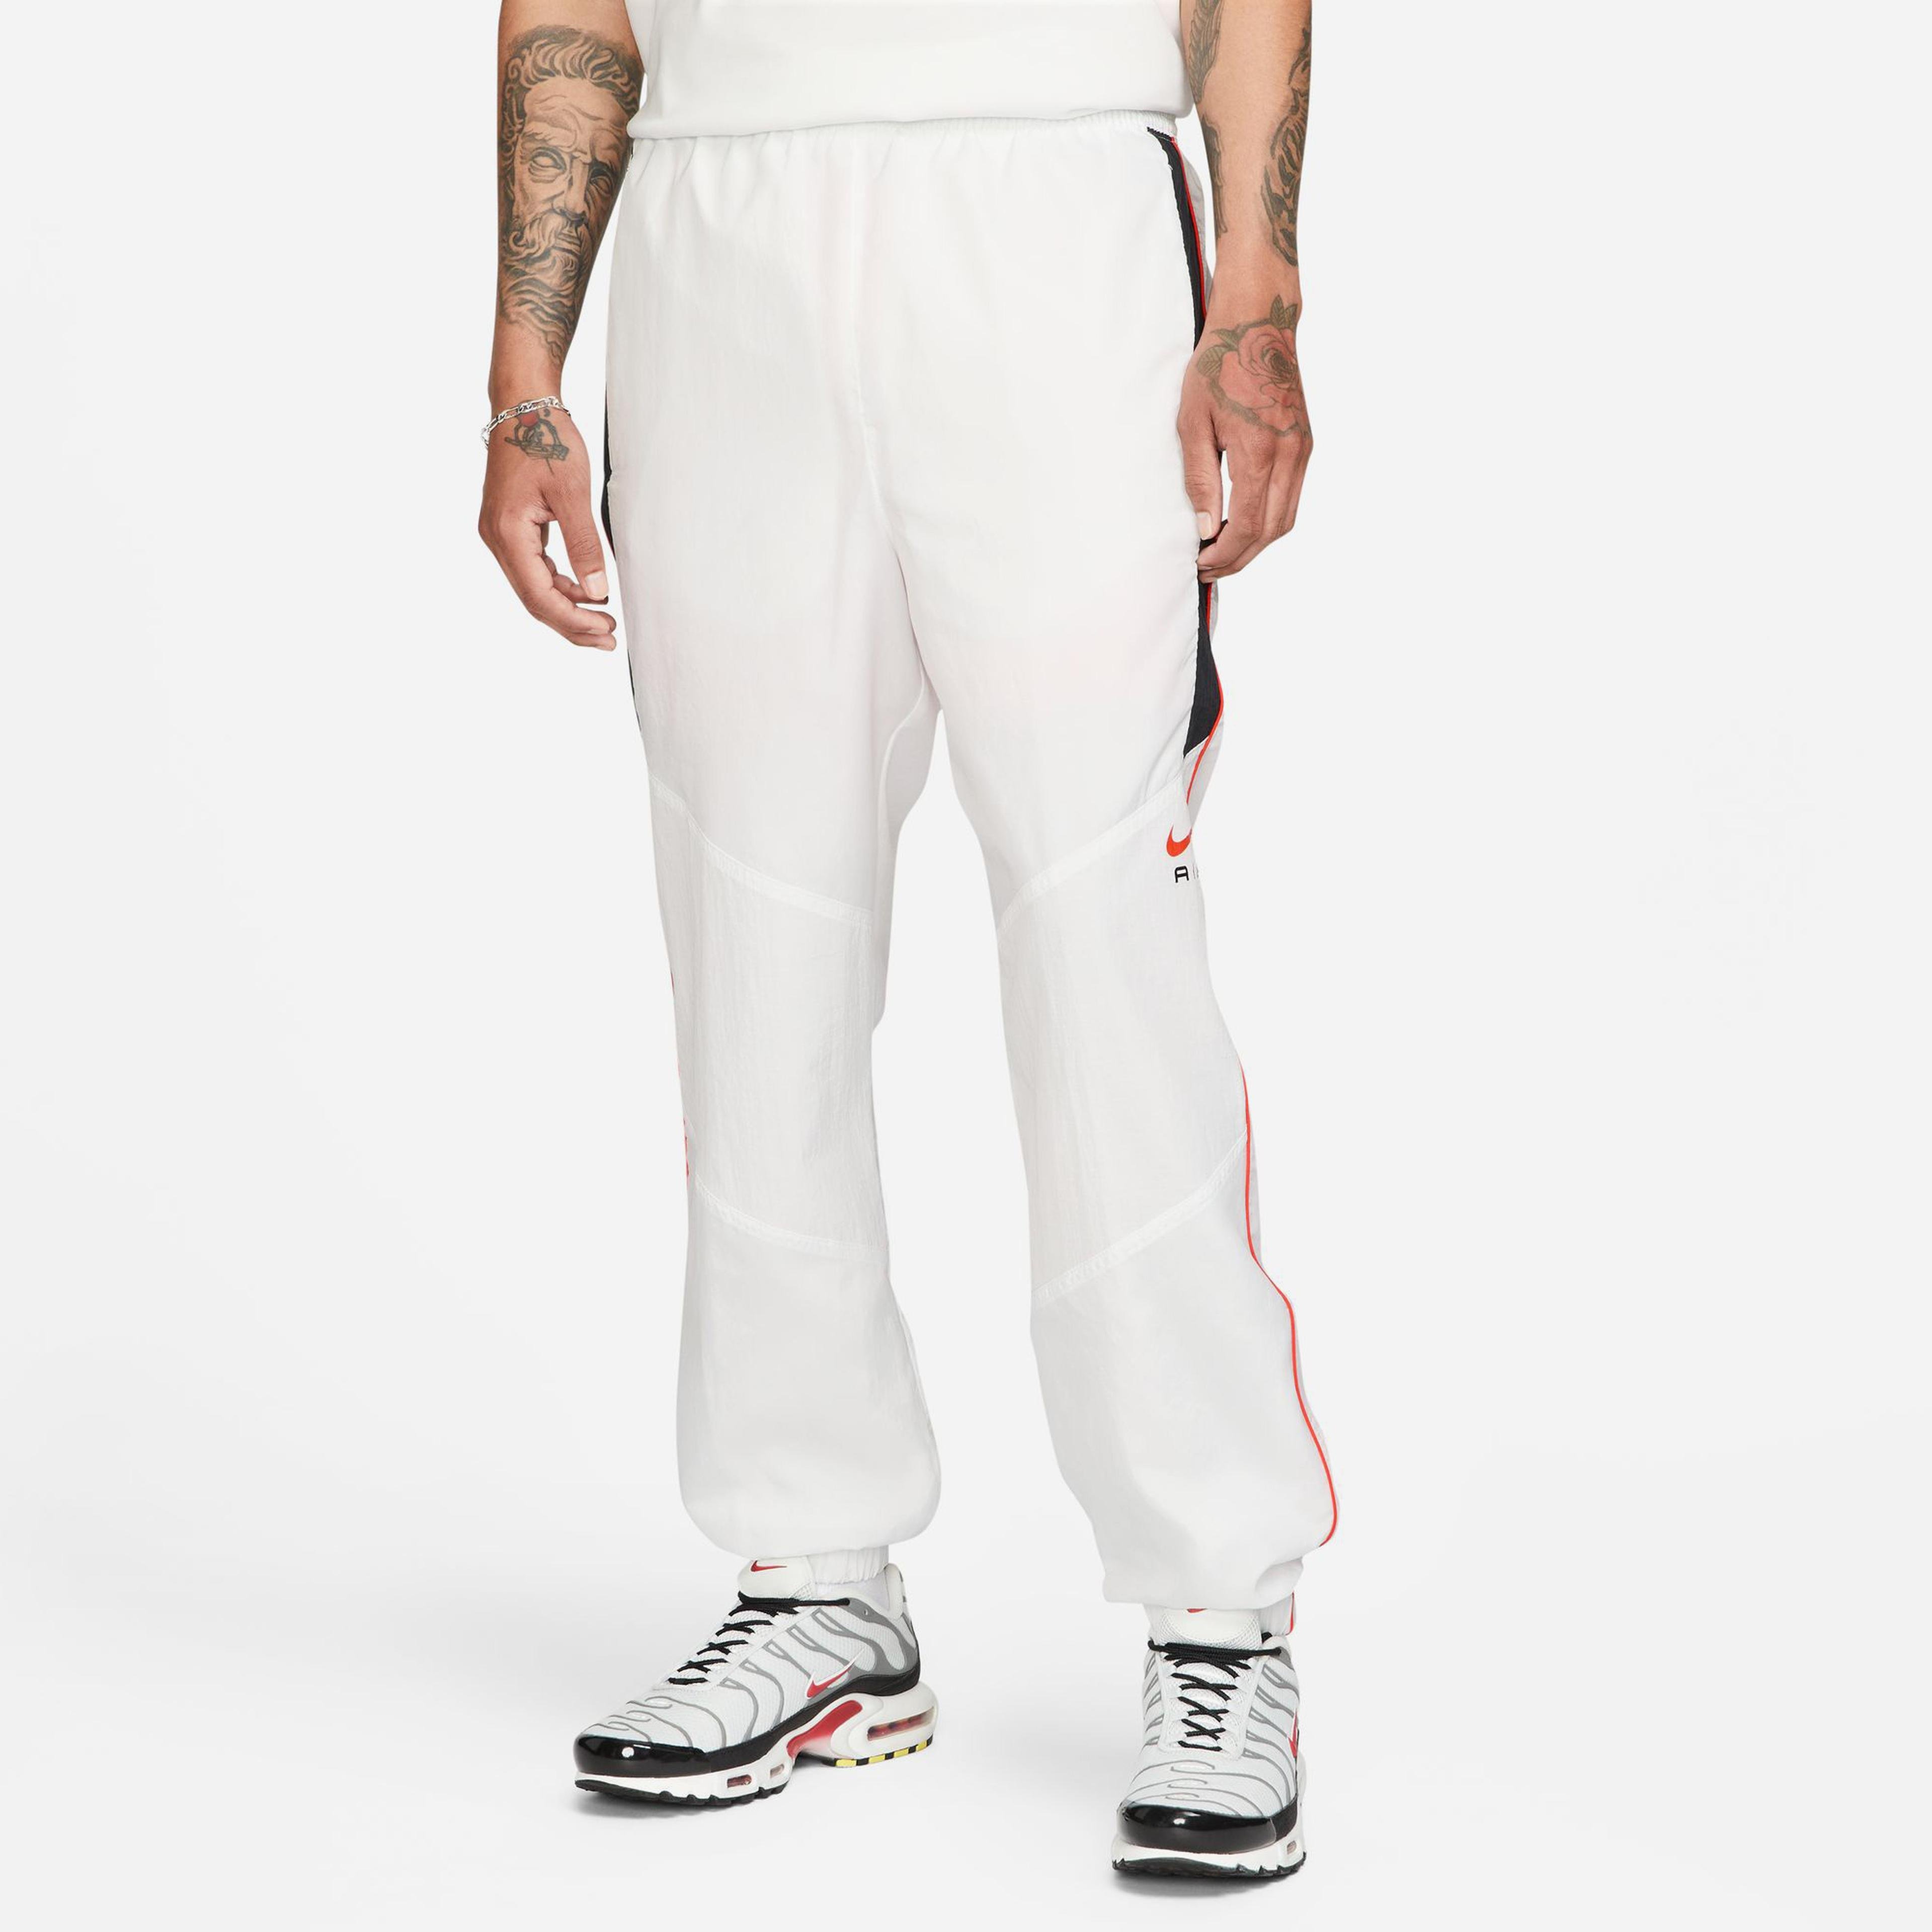 Nike Sportswear Swoosh Air Woven Erkek Beyaz Eşofman Altı